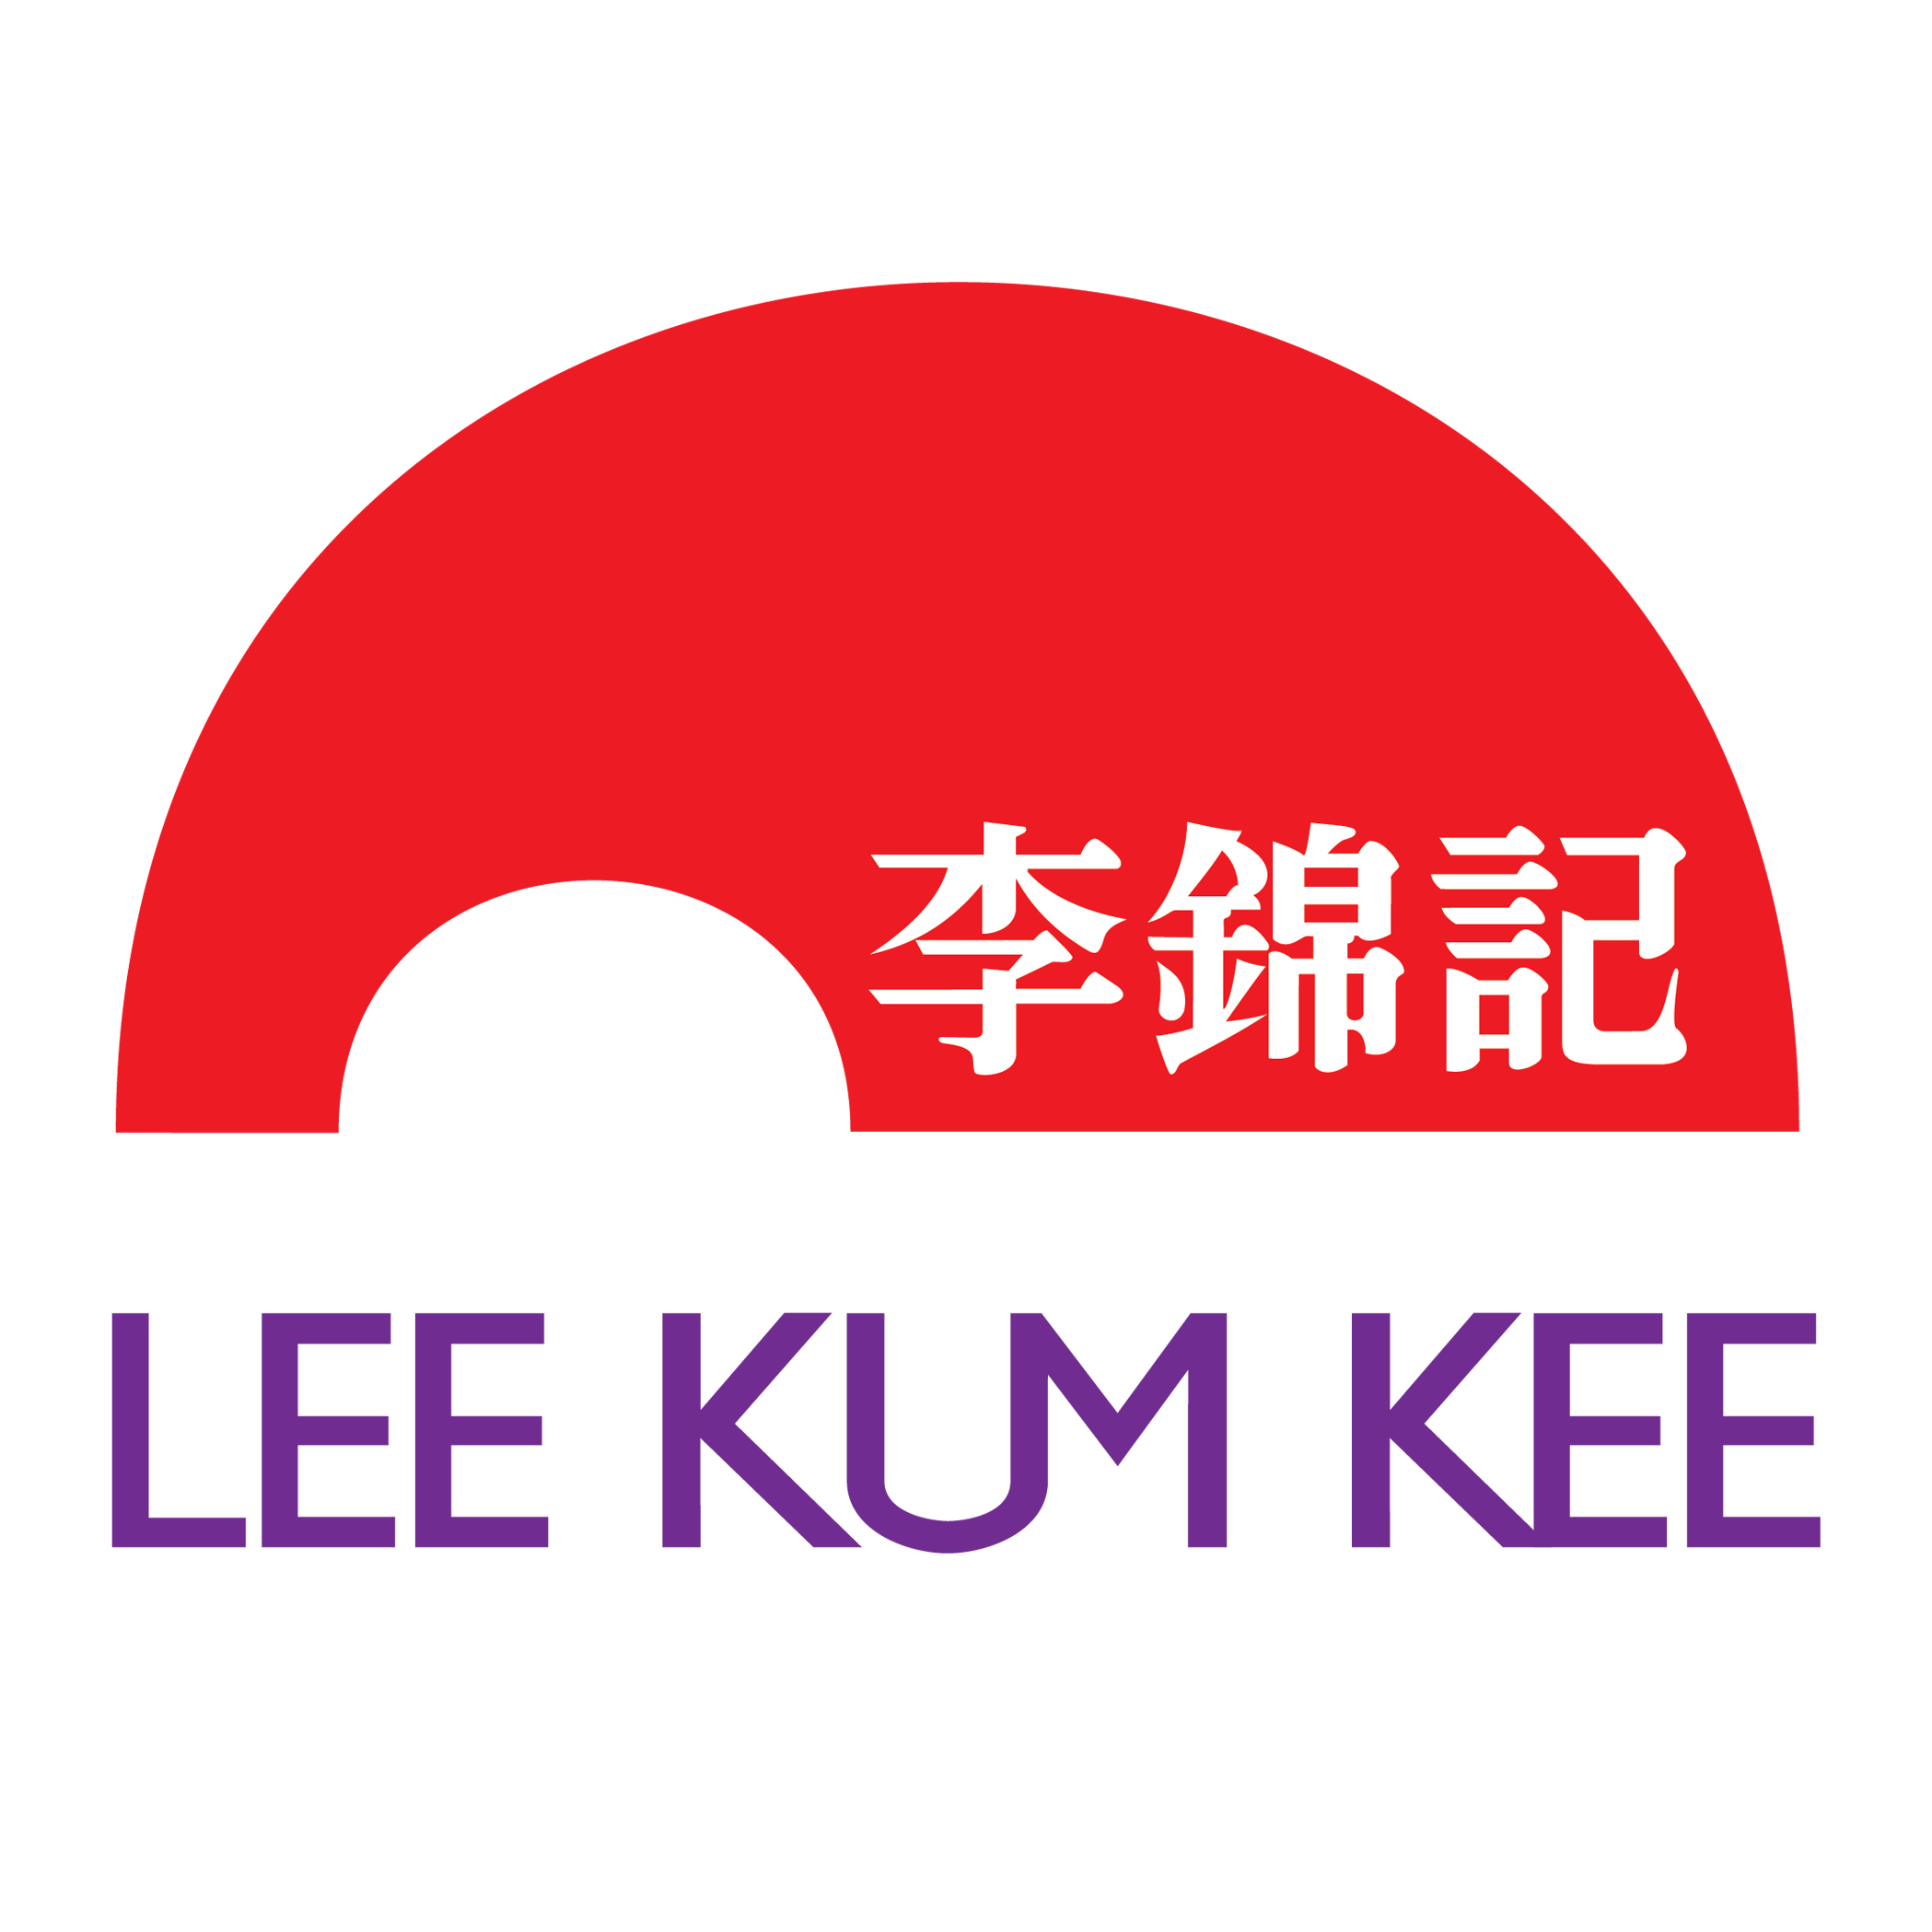 Lee Kum Kee 130th anniversary logo - TC